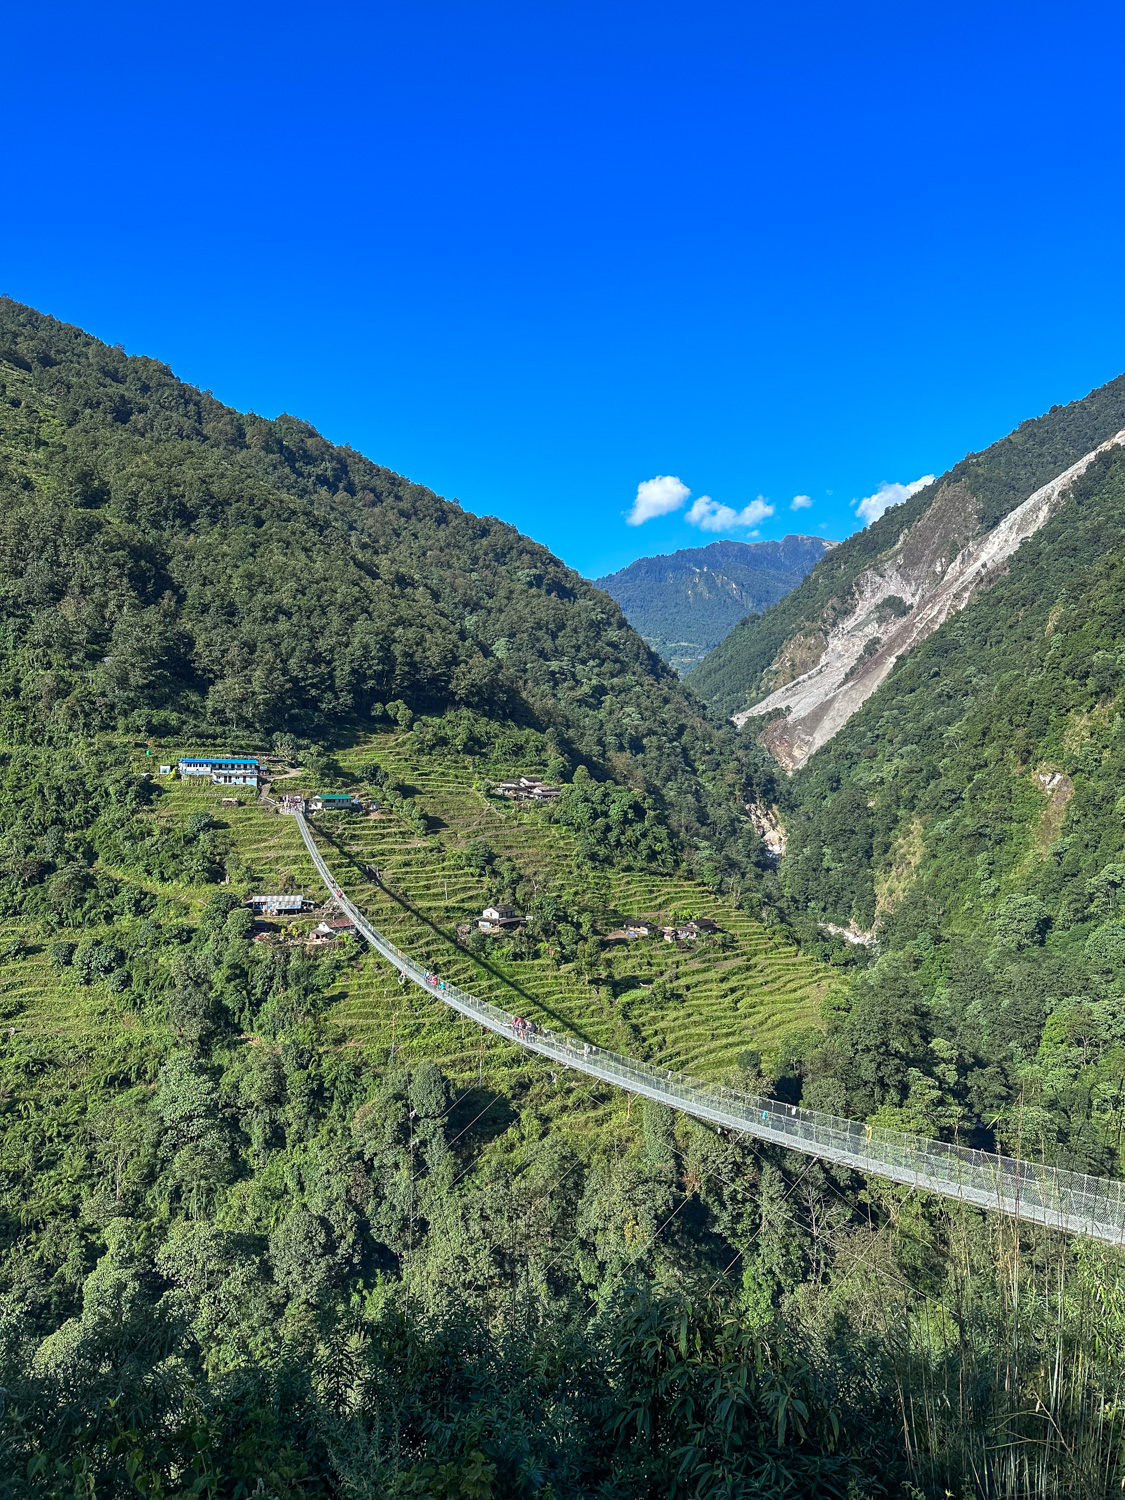 Hiking in the Annapurna region